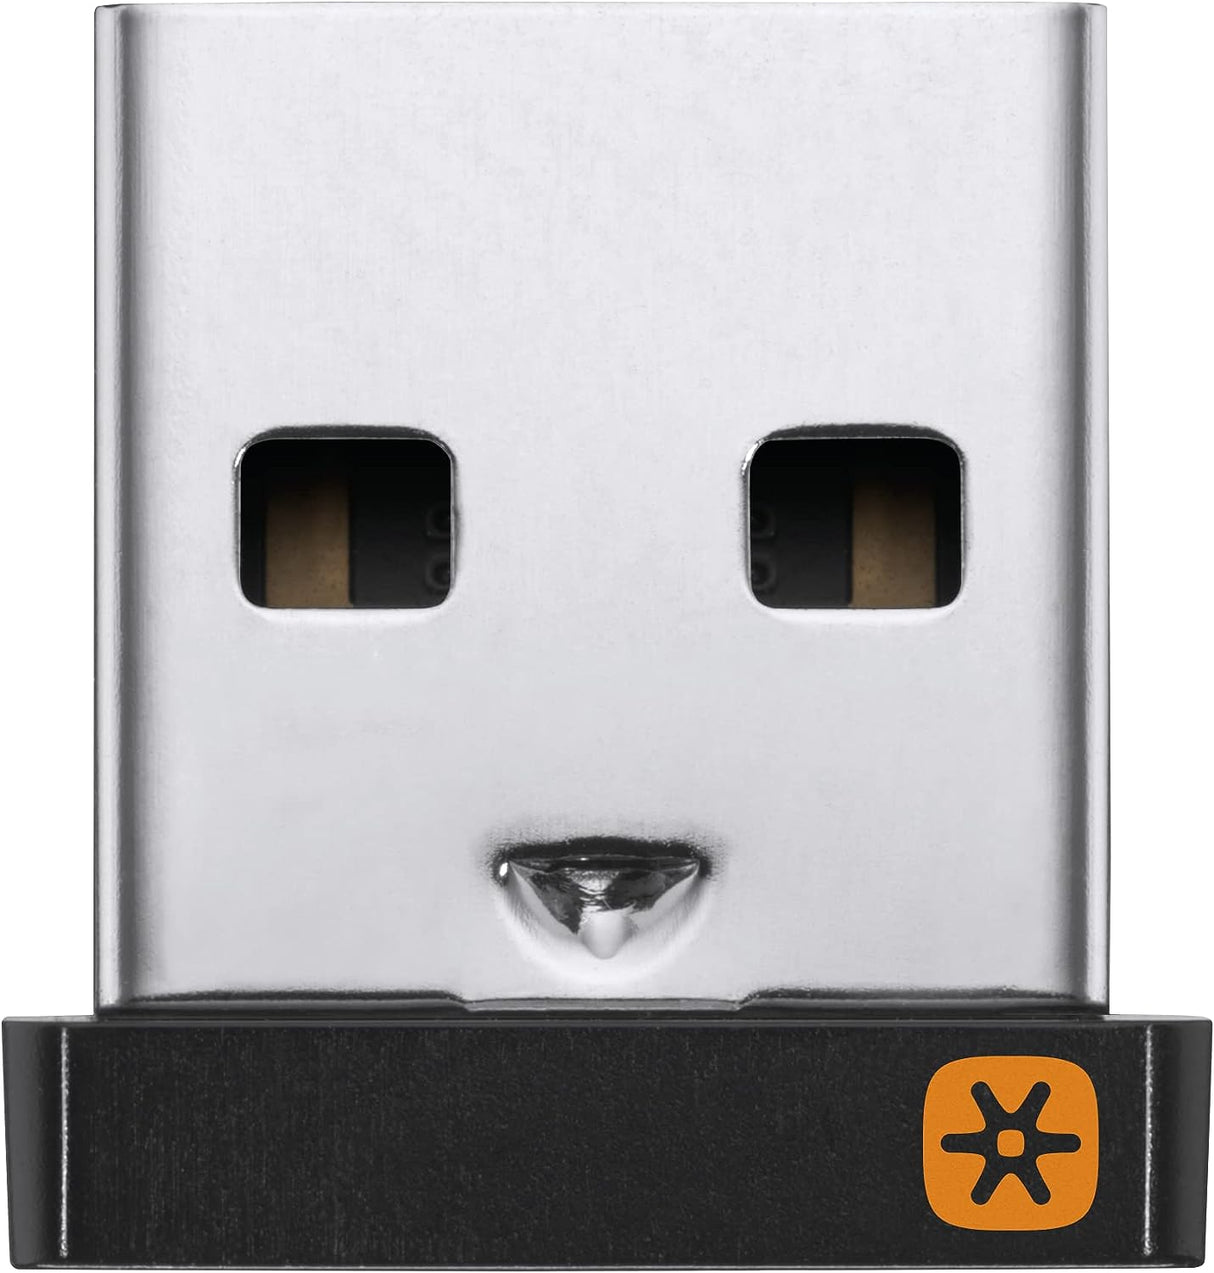 Receptor USB para Dispositivos Logitech Unifying, 6 Dispositivos - 910-005235 FullOffice.com 